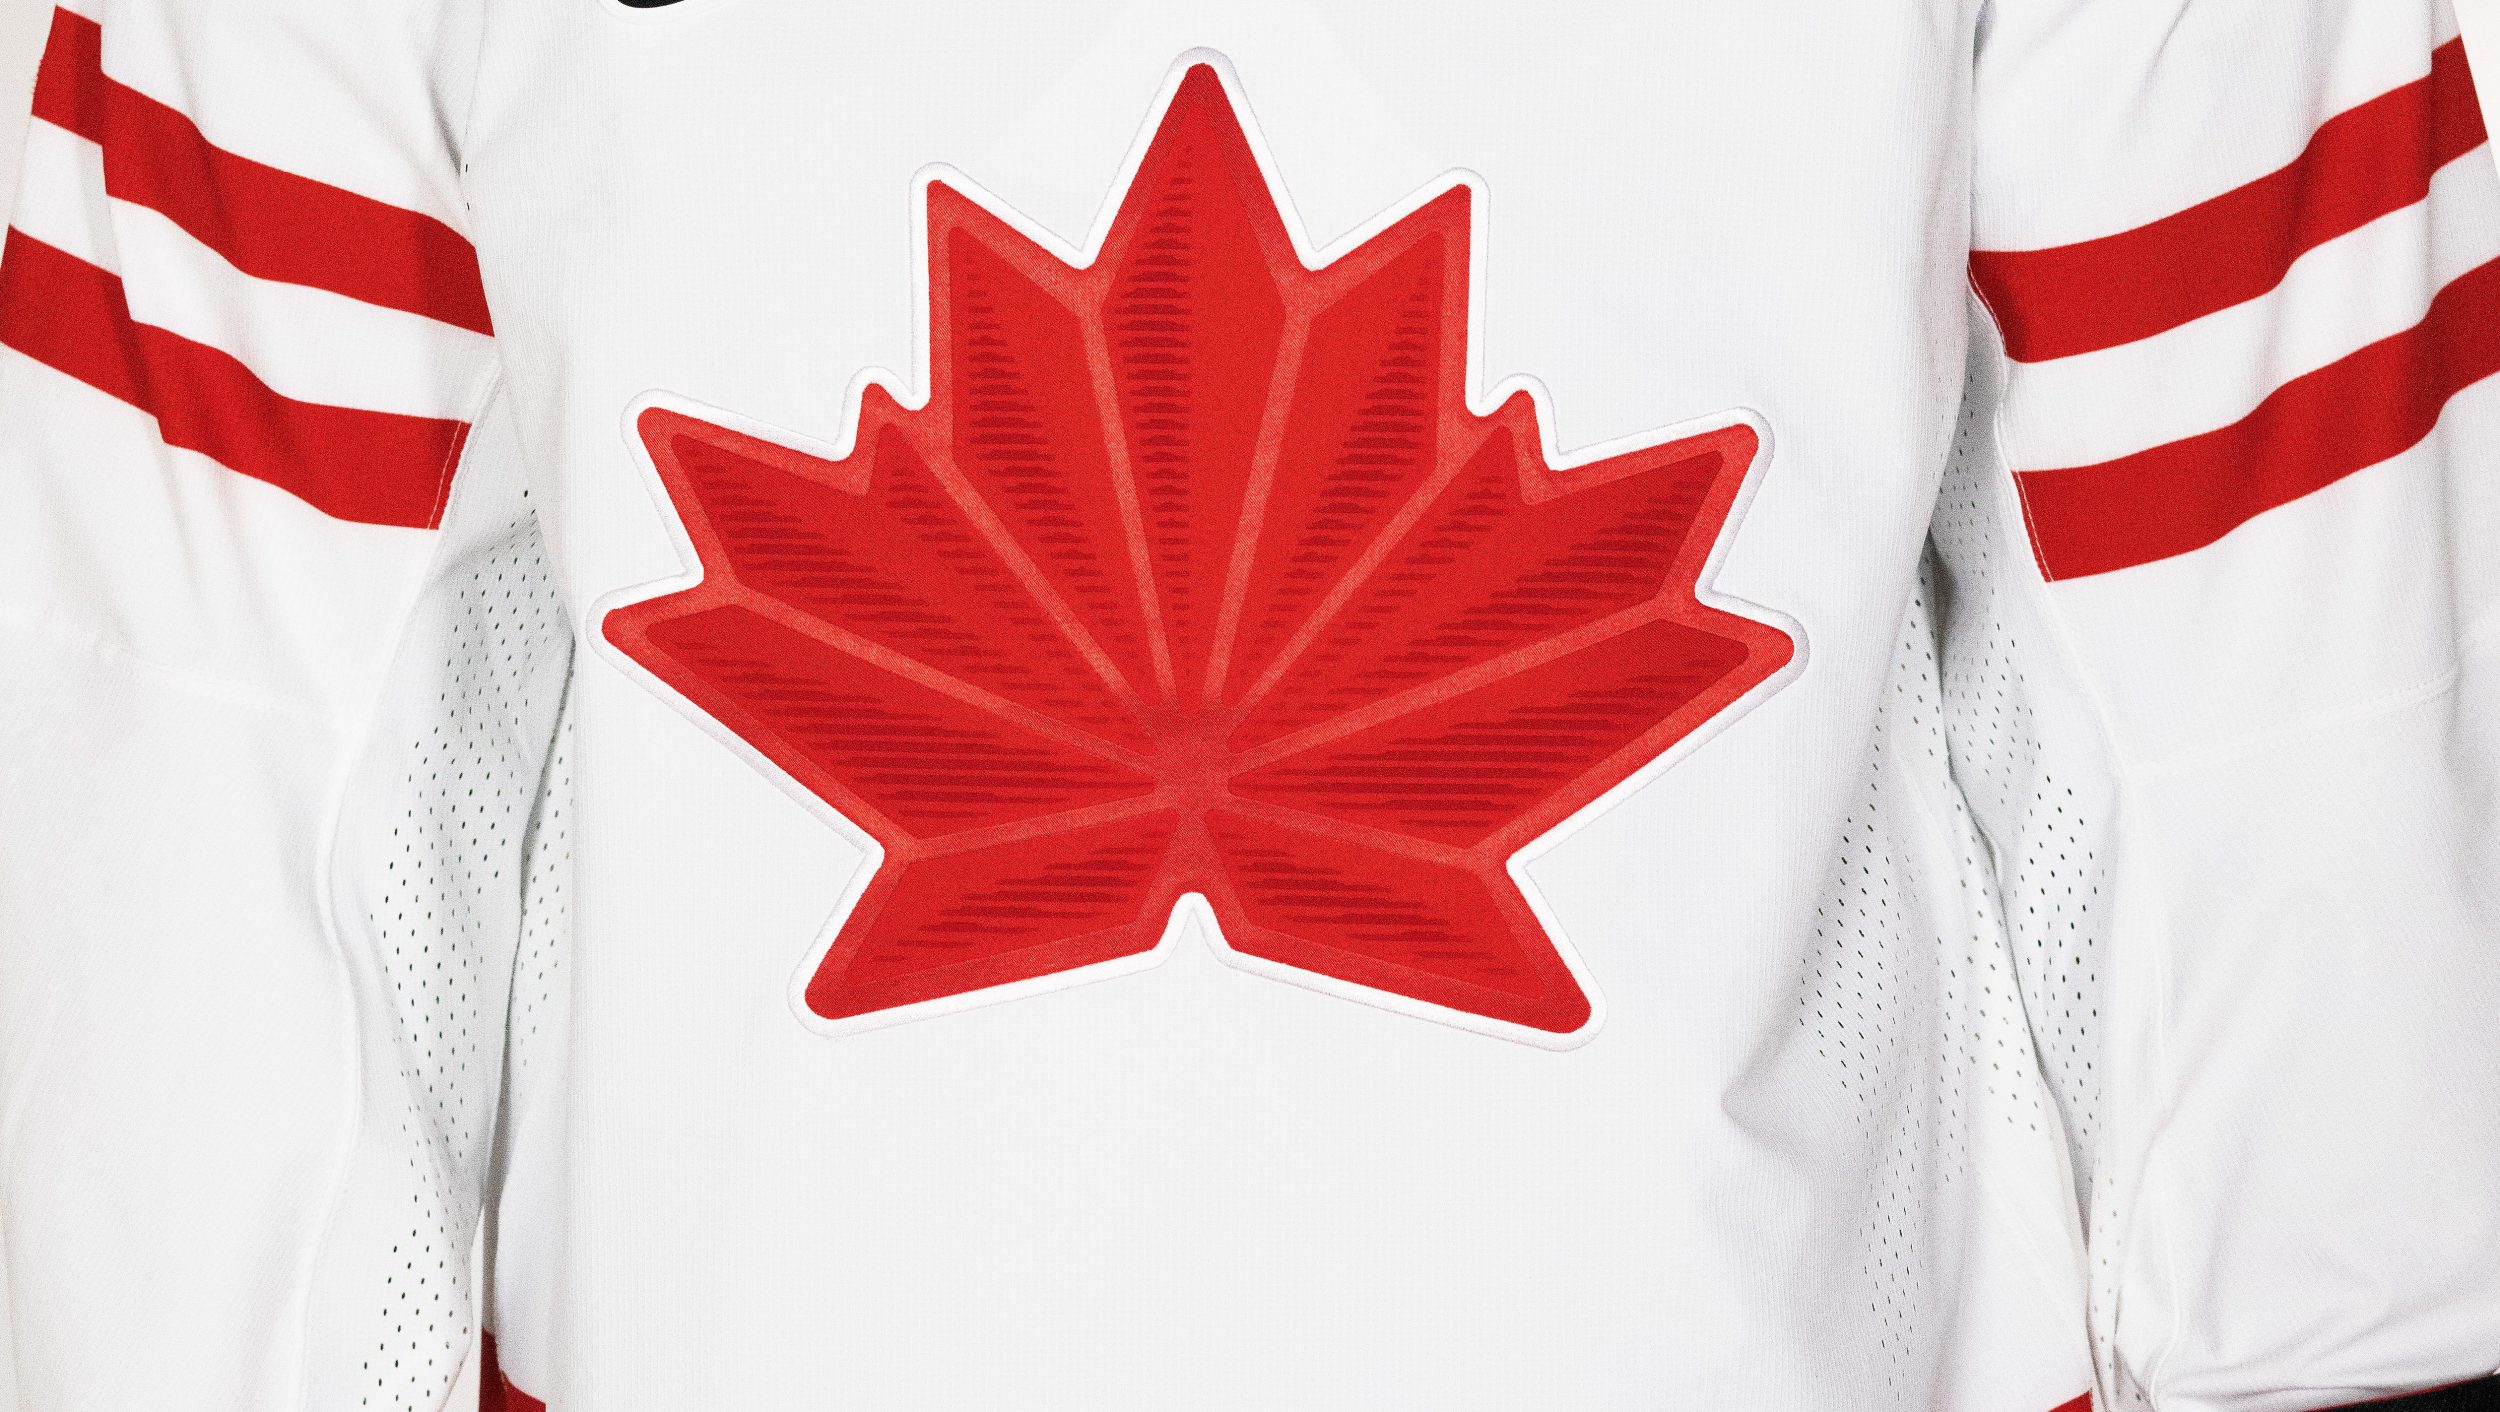 Hockey Canada reveals three jersey designs for Beijing Olympics